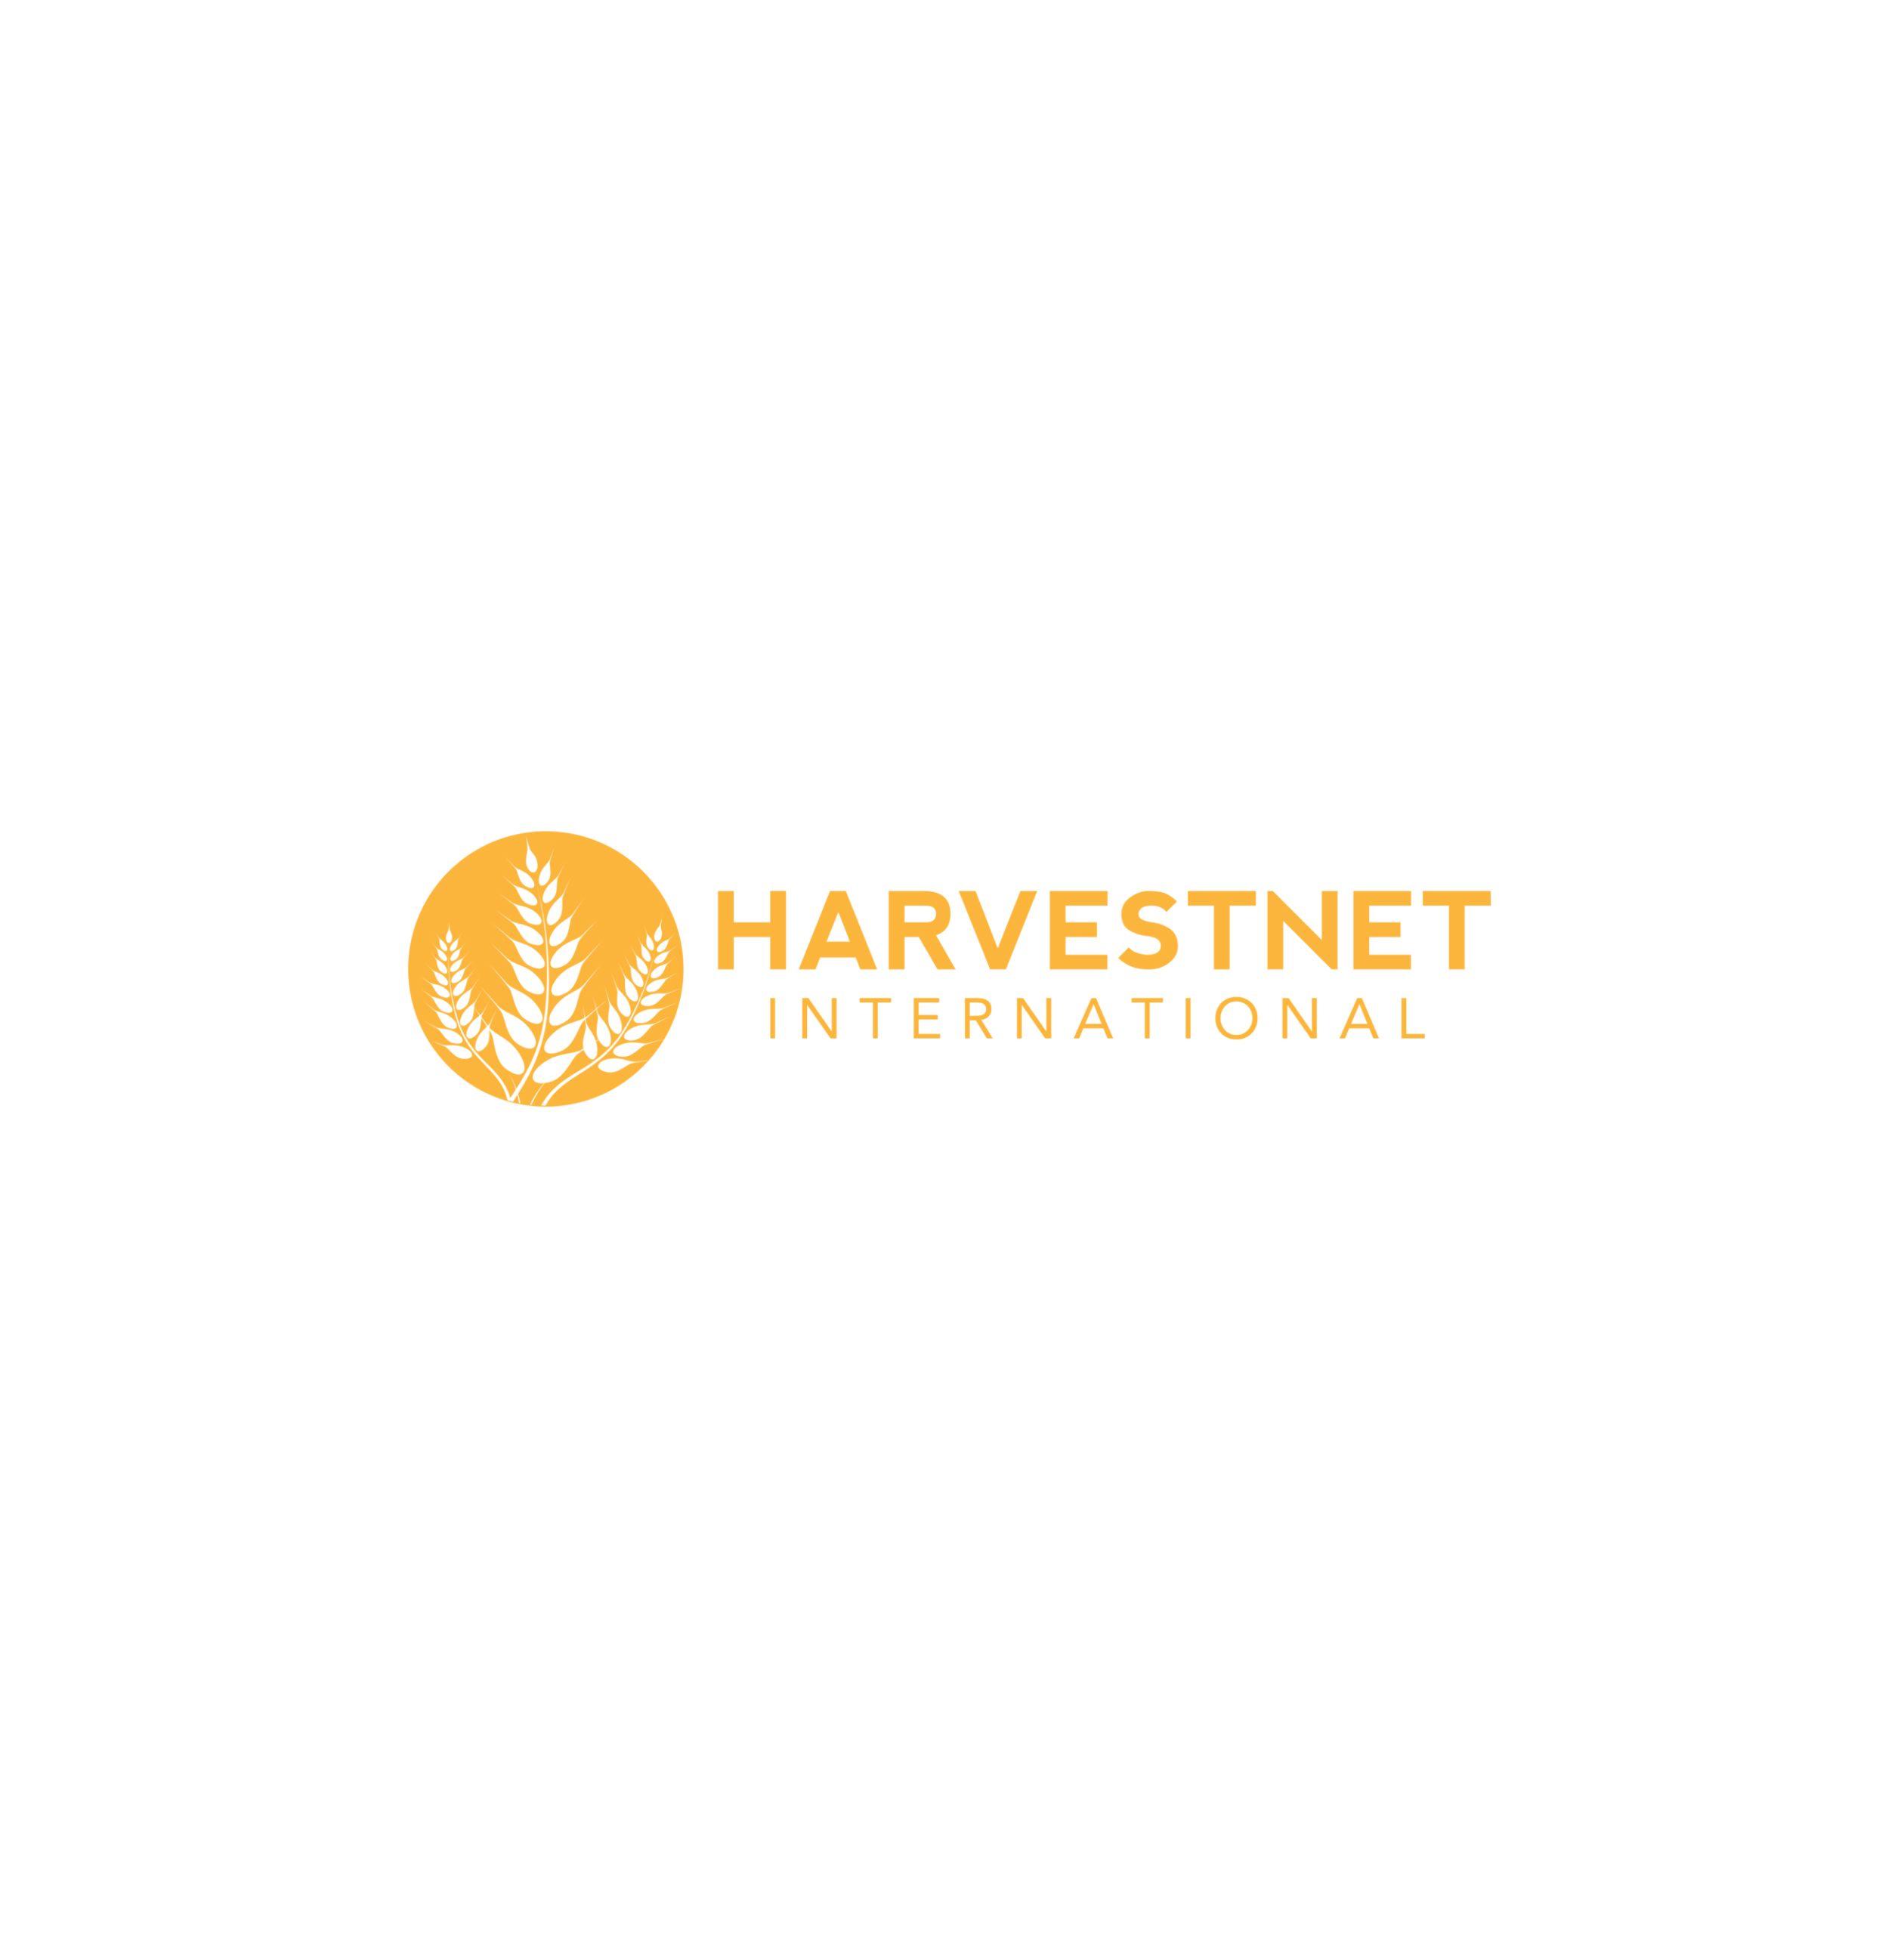 HarvestNet International logo.